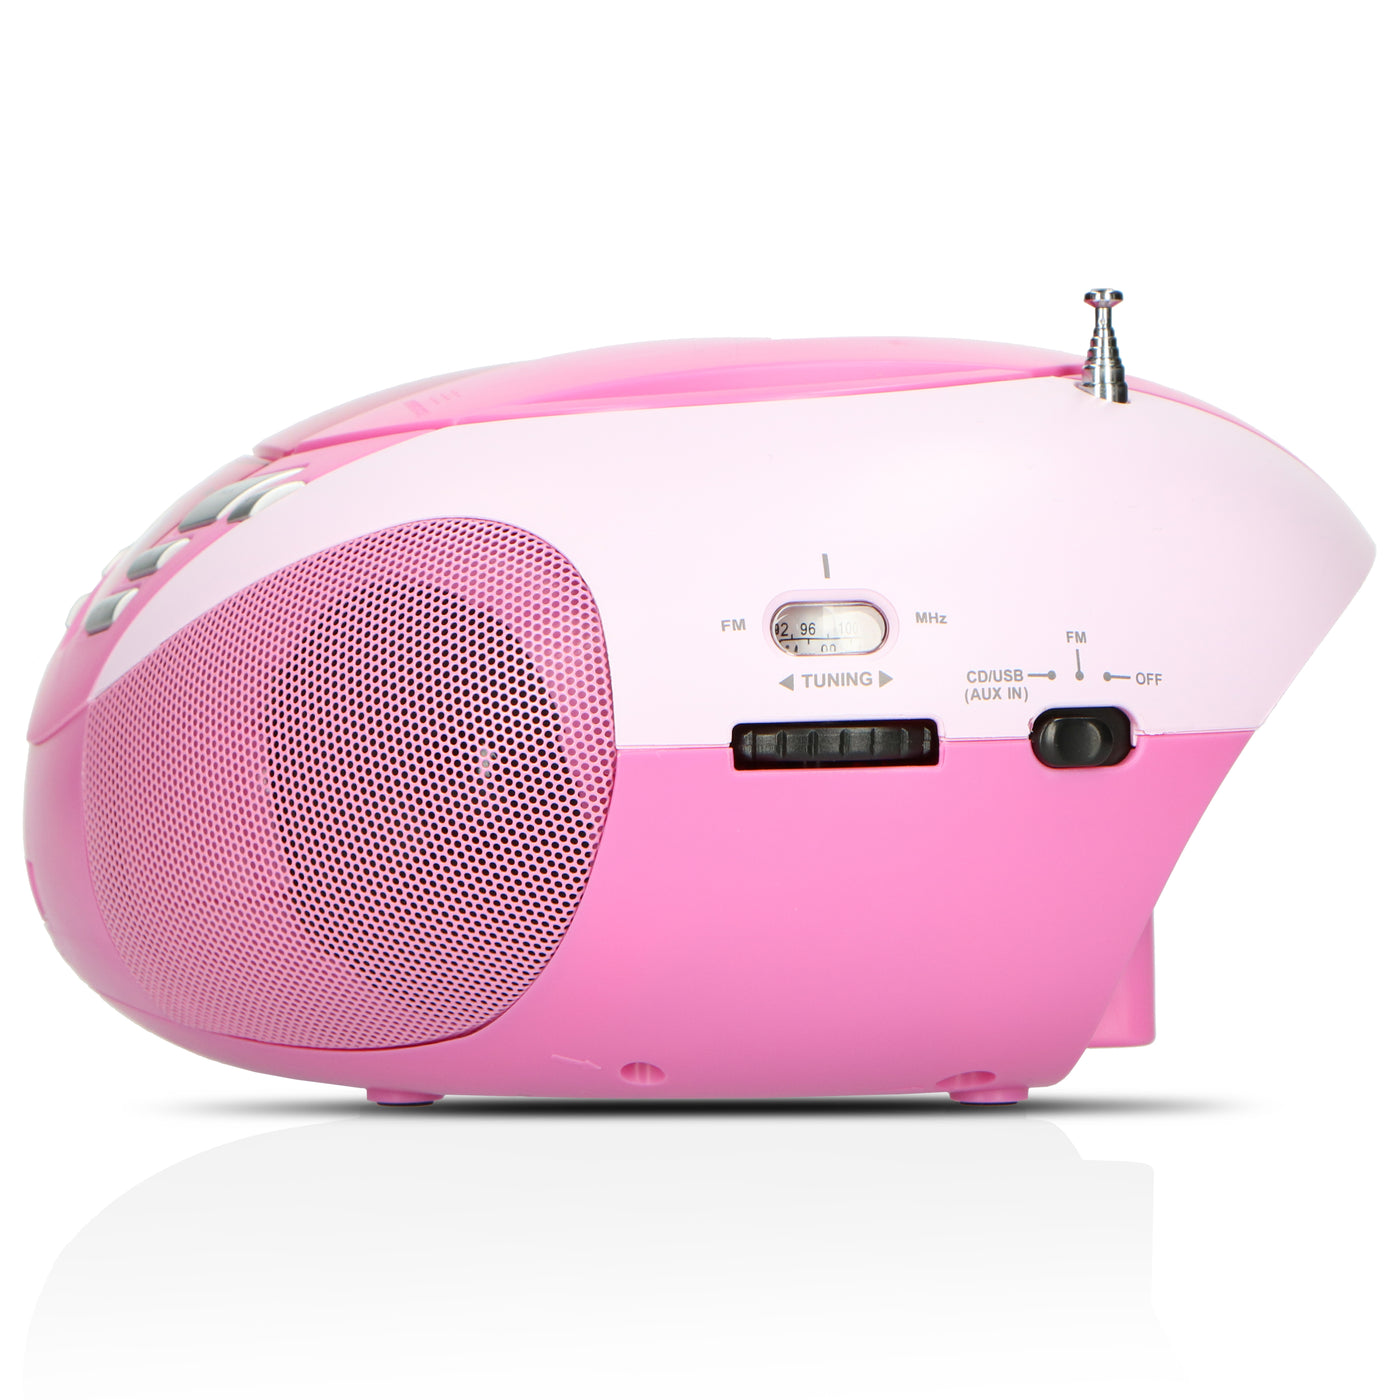 LENCO SCD-37 USB Pink - Draagbare FM Radio CD en USB speler - Roze